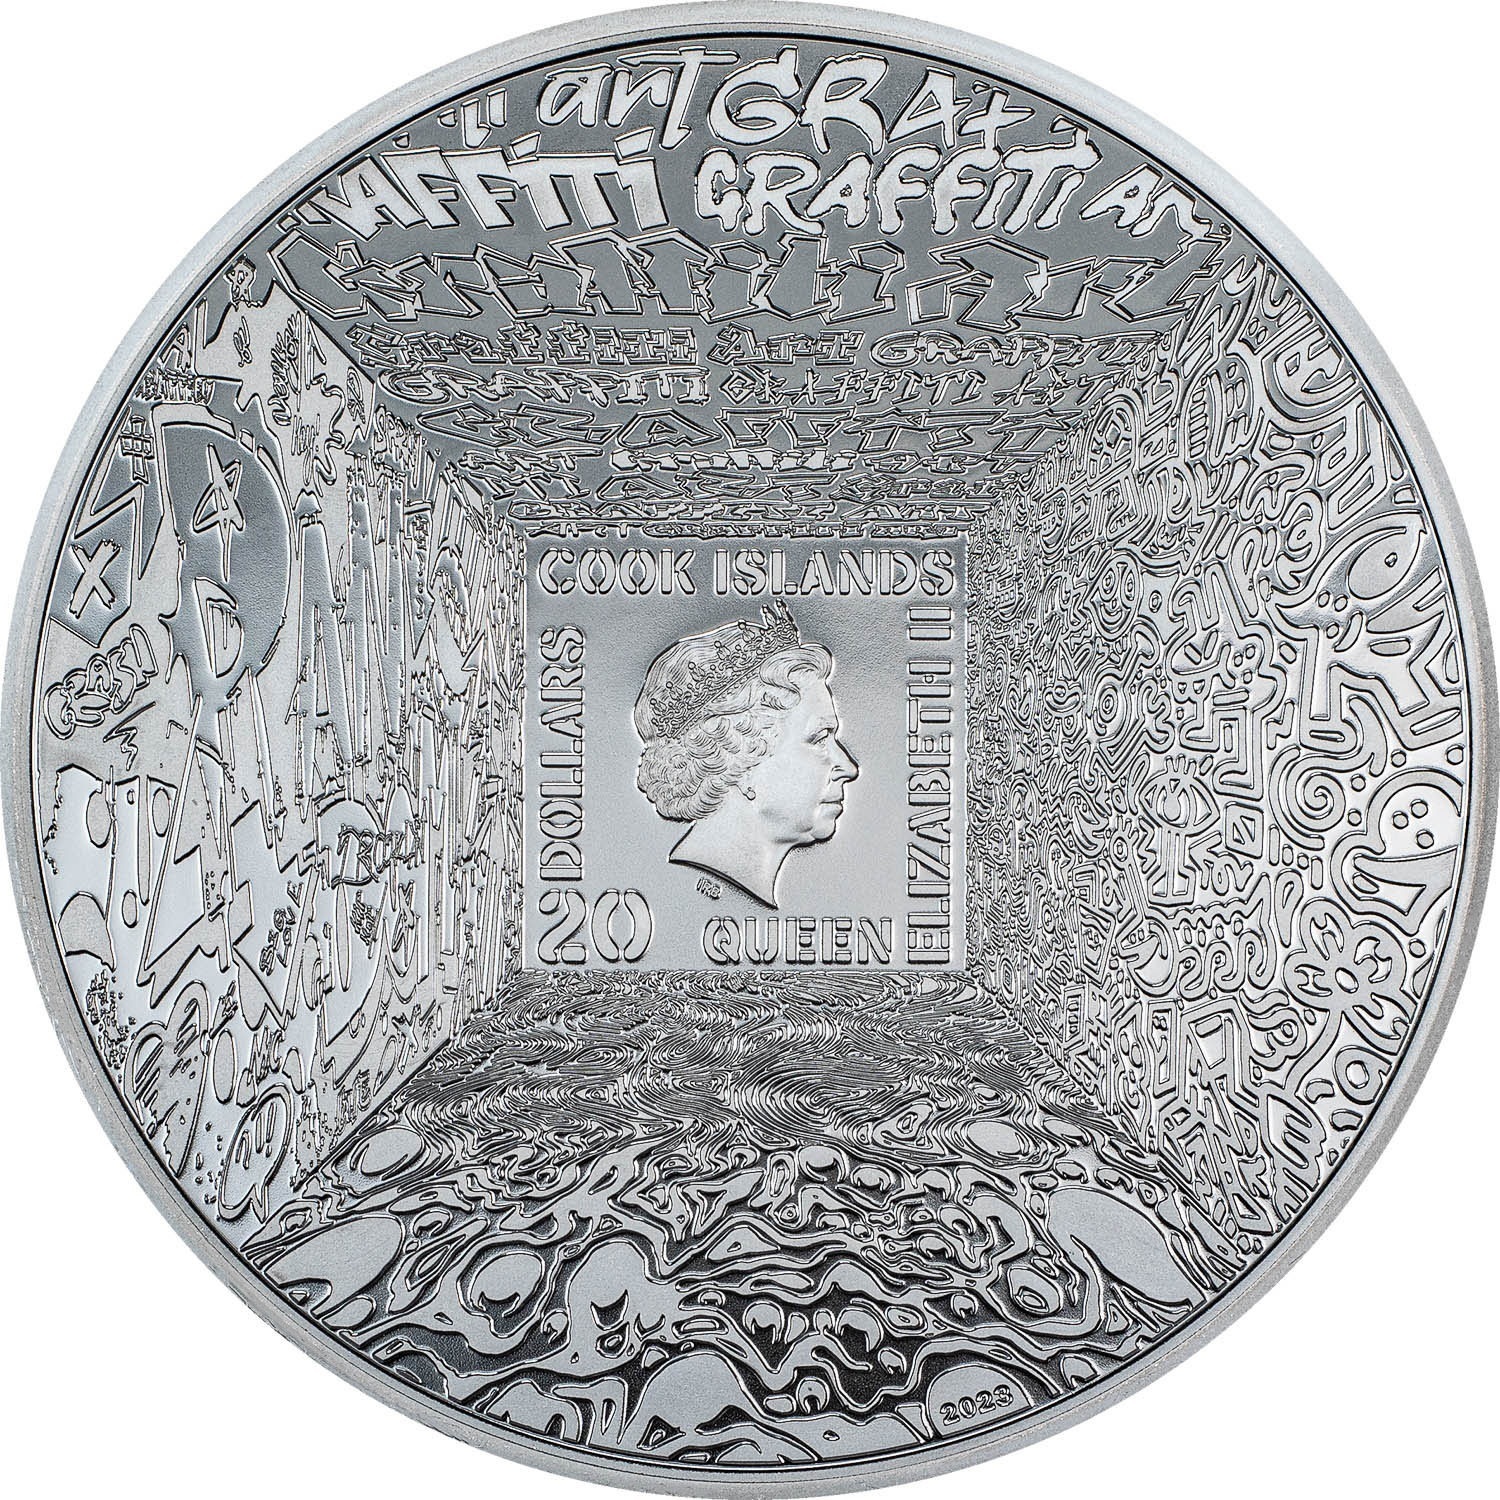 (W099.20.D.2023.1) Cook Islands 20 Dollars Mona Lisa 2023 - Black Proof silver Obverse (zoom)